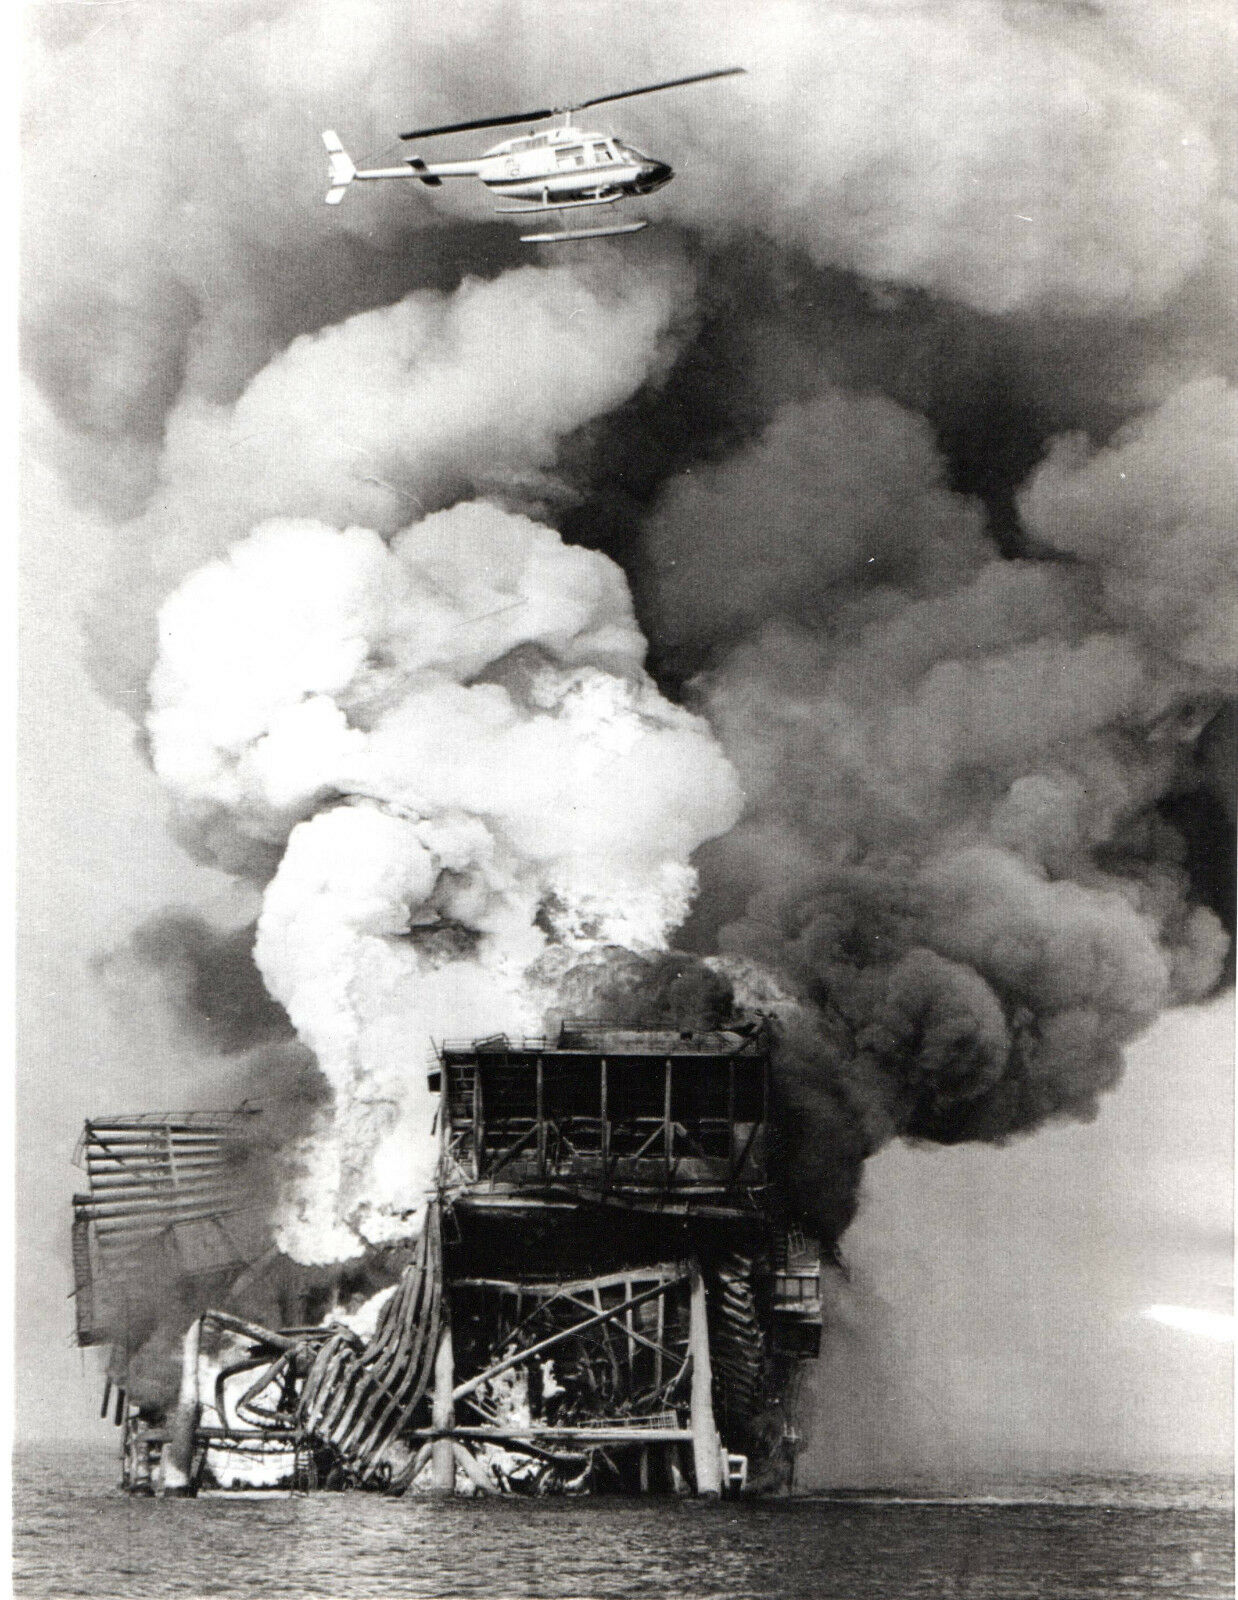 1970 Vintage Press Photo Helicopter Burning Shell Oil Co. Platform New Orleans